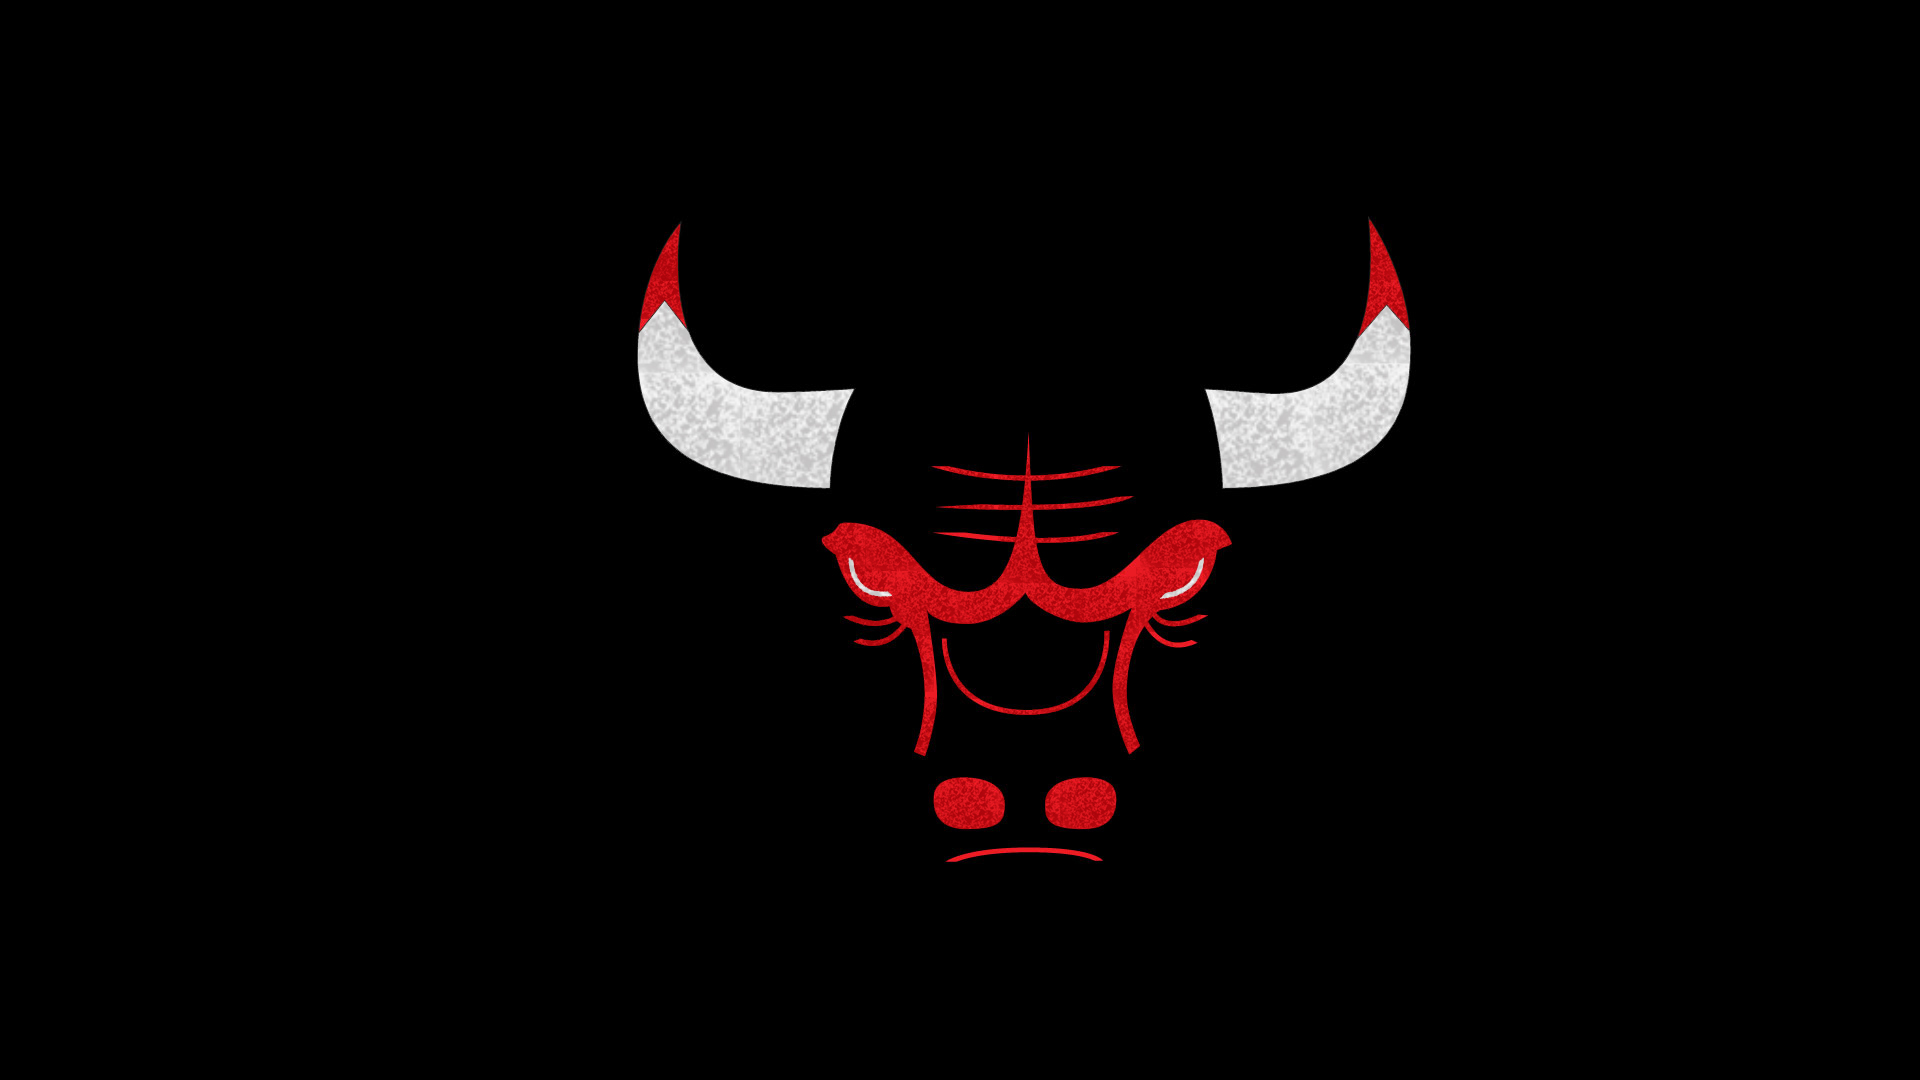 Chicago Bulls Image Wallpaper